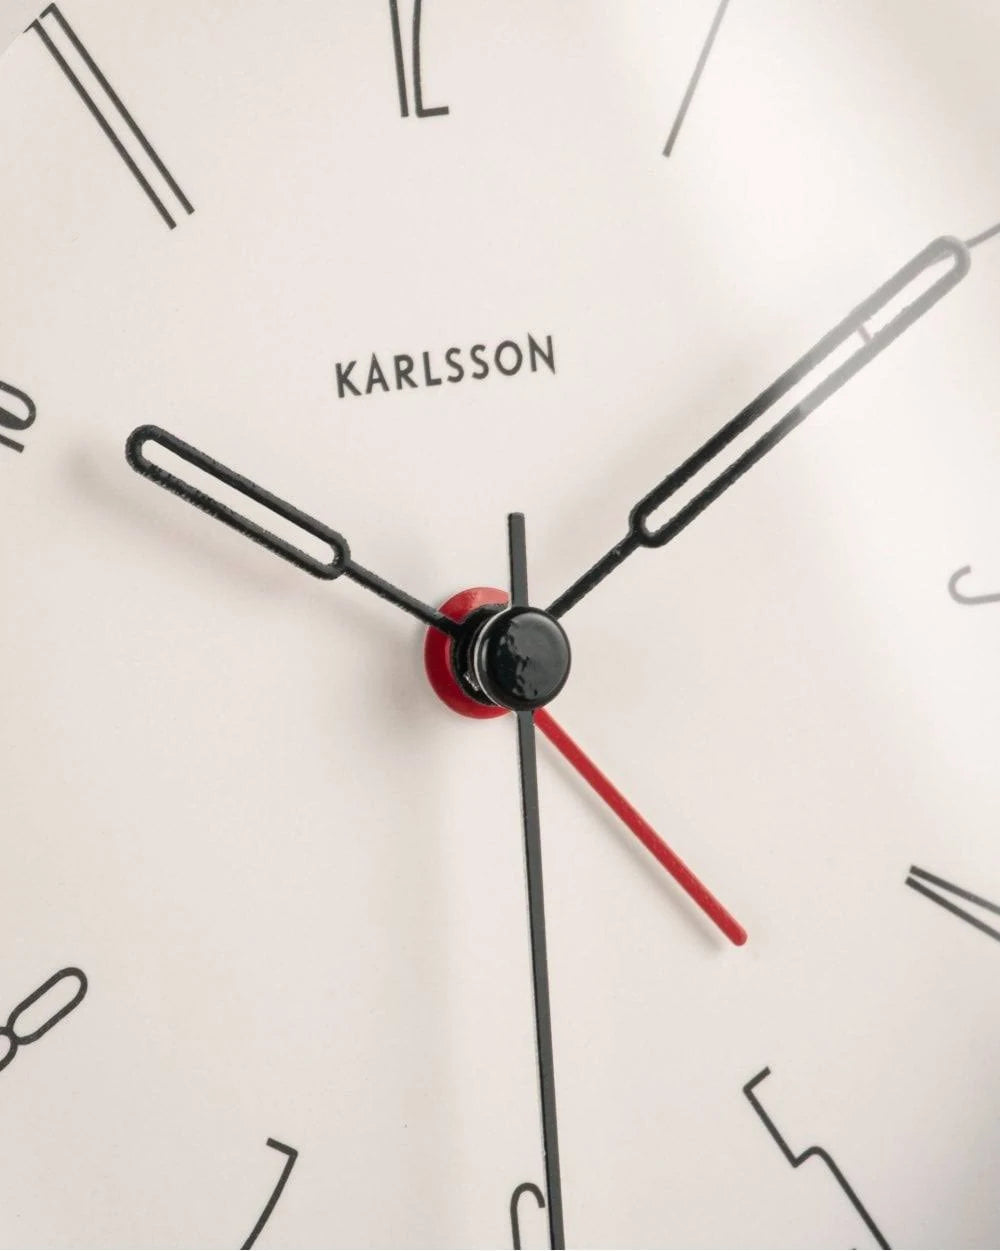 Karlsson belle alarm clock white